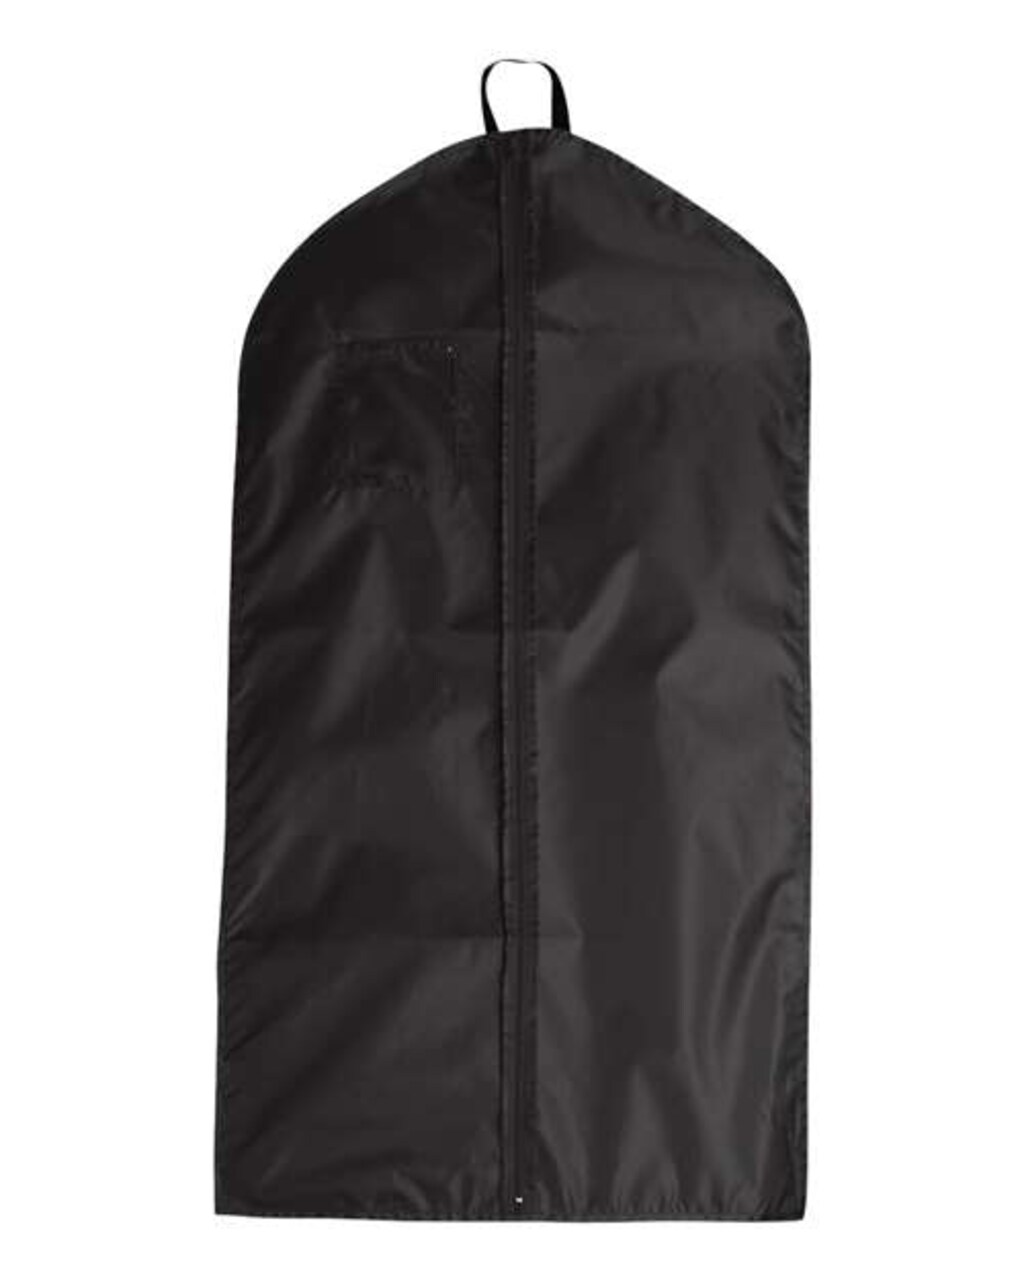 Garment Bag for Wrinkle-Free Travel Wardrobe | Large 4.5W x 5.5H ID card  clear plastic holder, 210D nylon Bag | Wrinkle-Free Travel and Impeccable